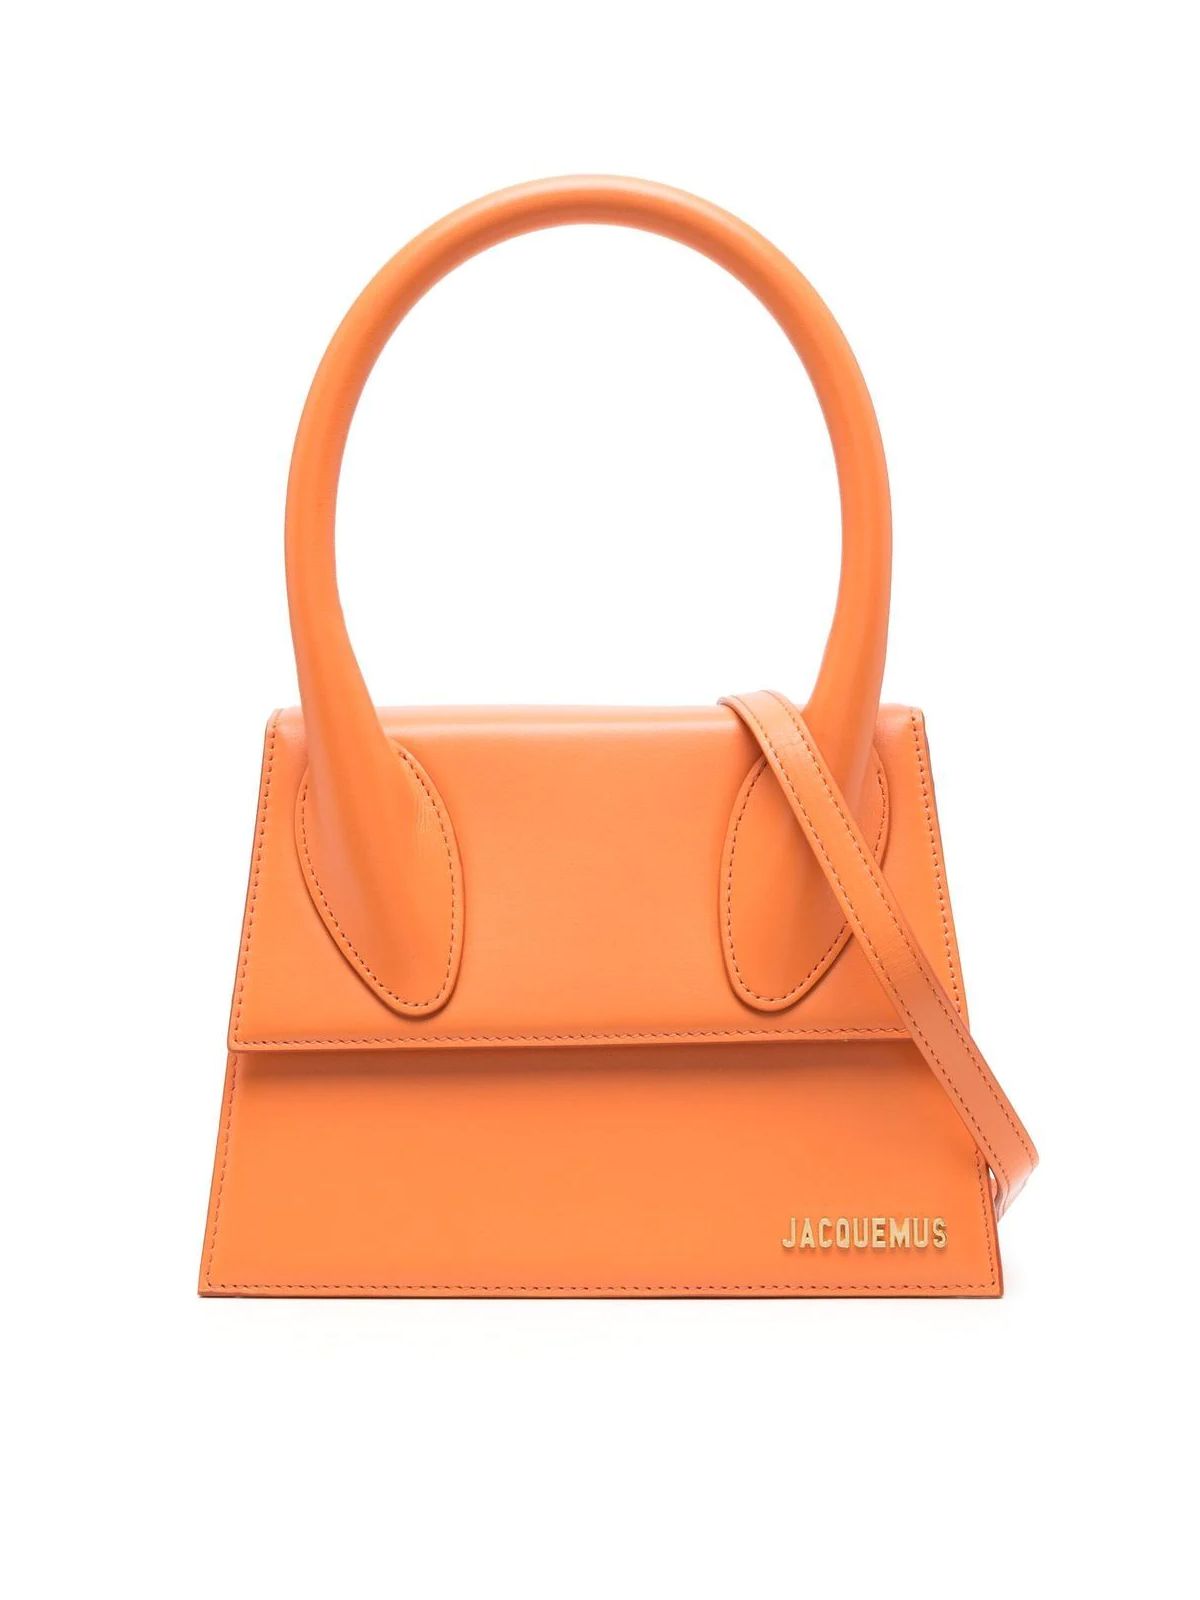 JACQUEMUS Bags for Women | ModeSens